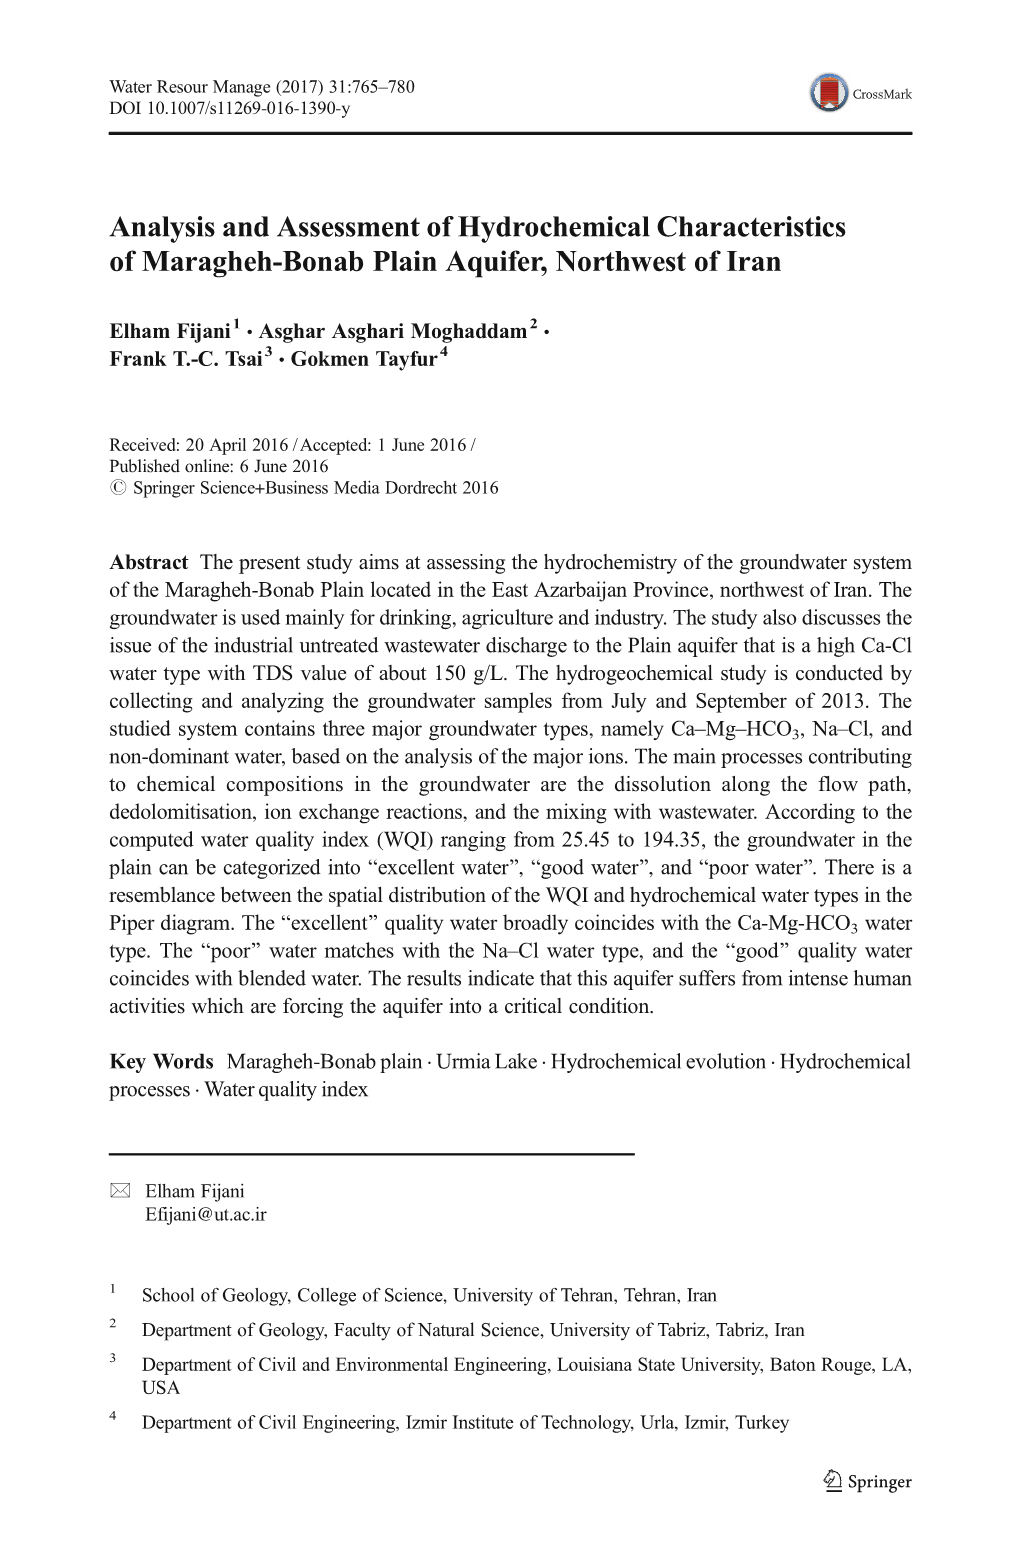 Analysis and Assessment of Hydrochemical Characteristics of Maragheh-Bonab Plain Aquifer, Northwest of Iran